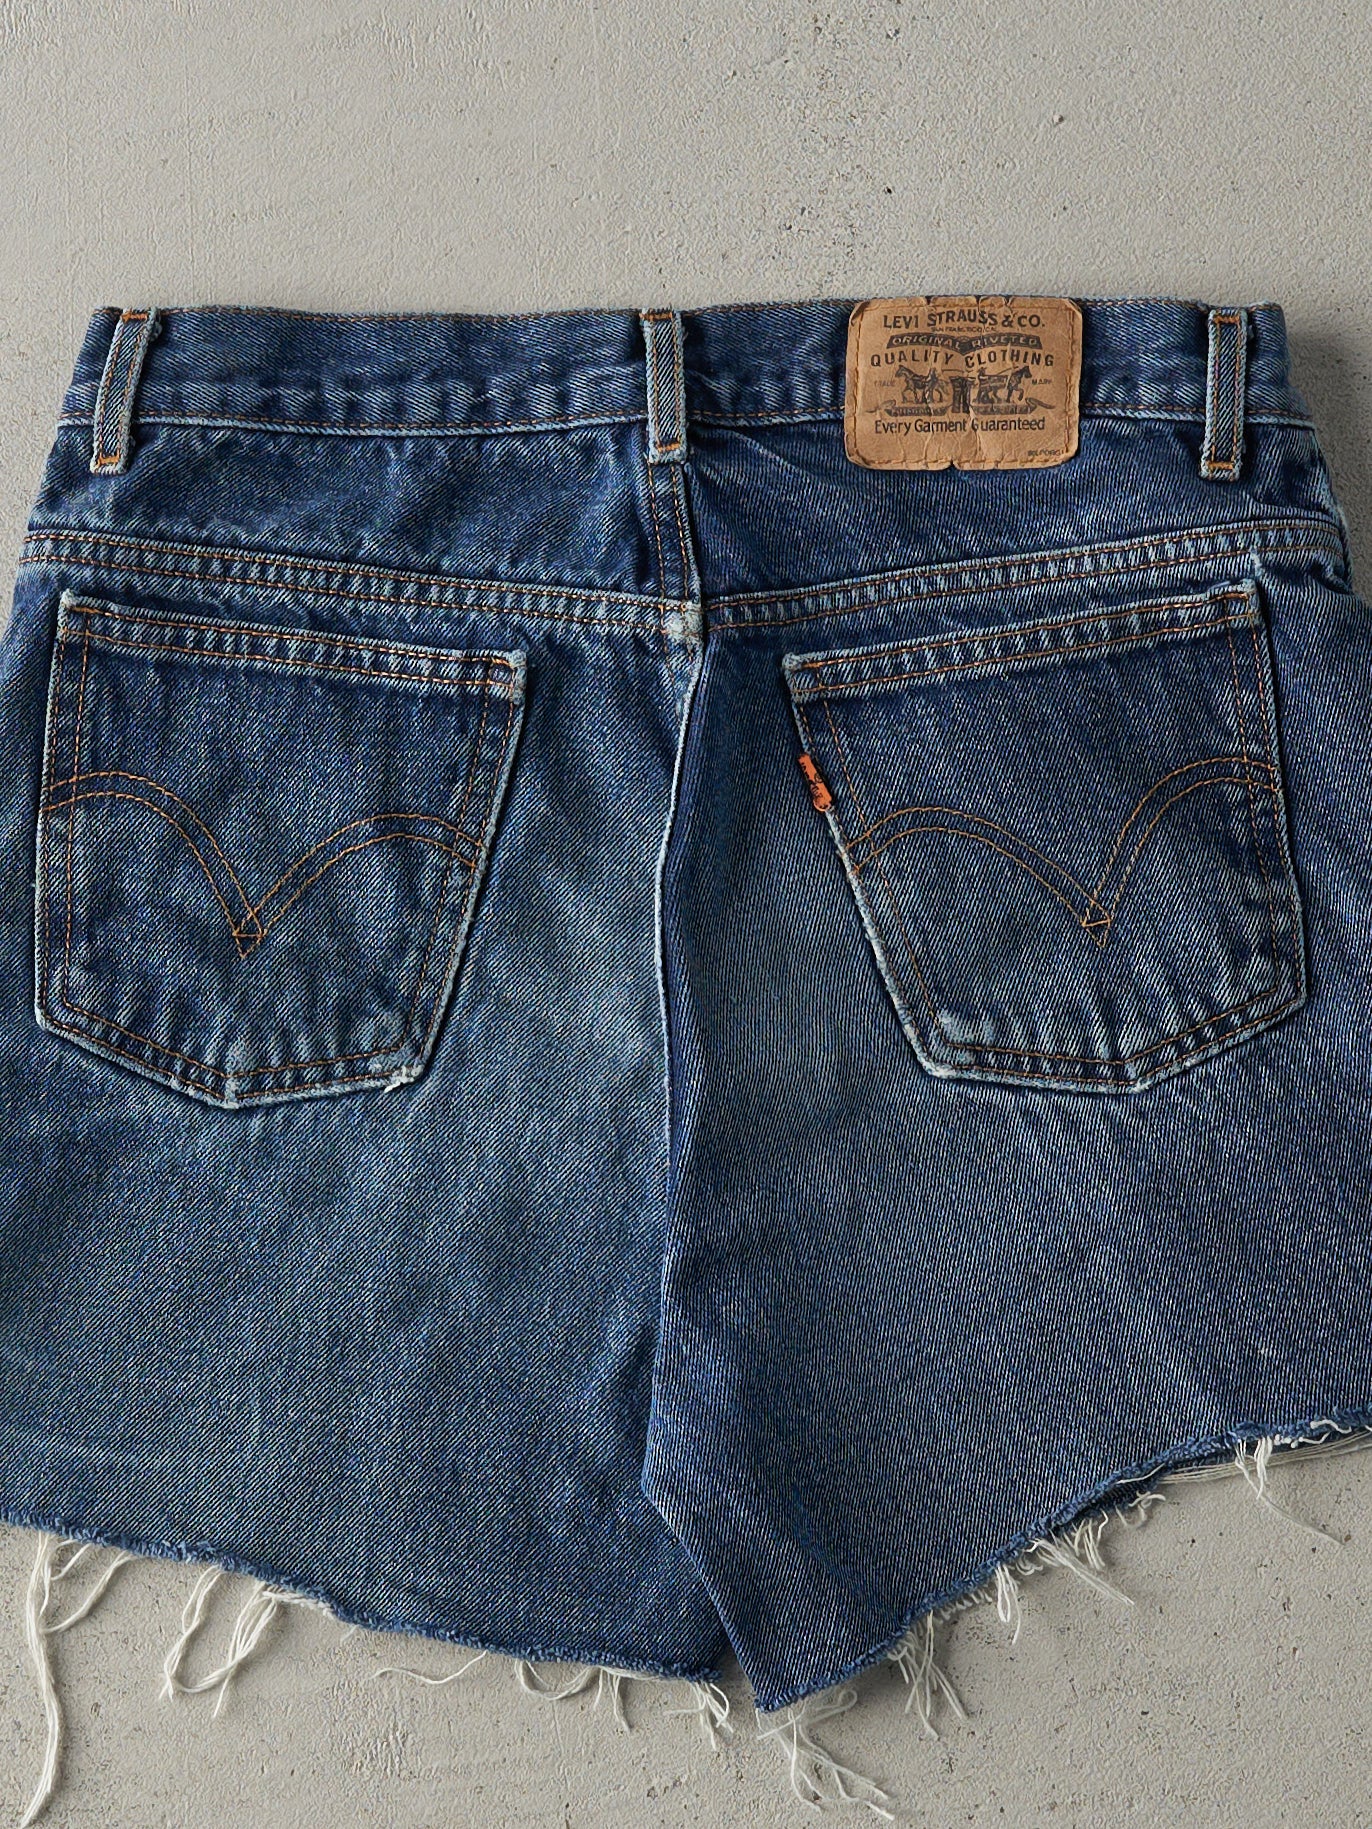 Vintage 90s Dark Wash Levi's Orange Tab Cut Off Jean Shorts (30x4)